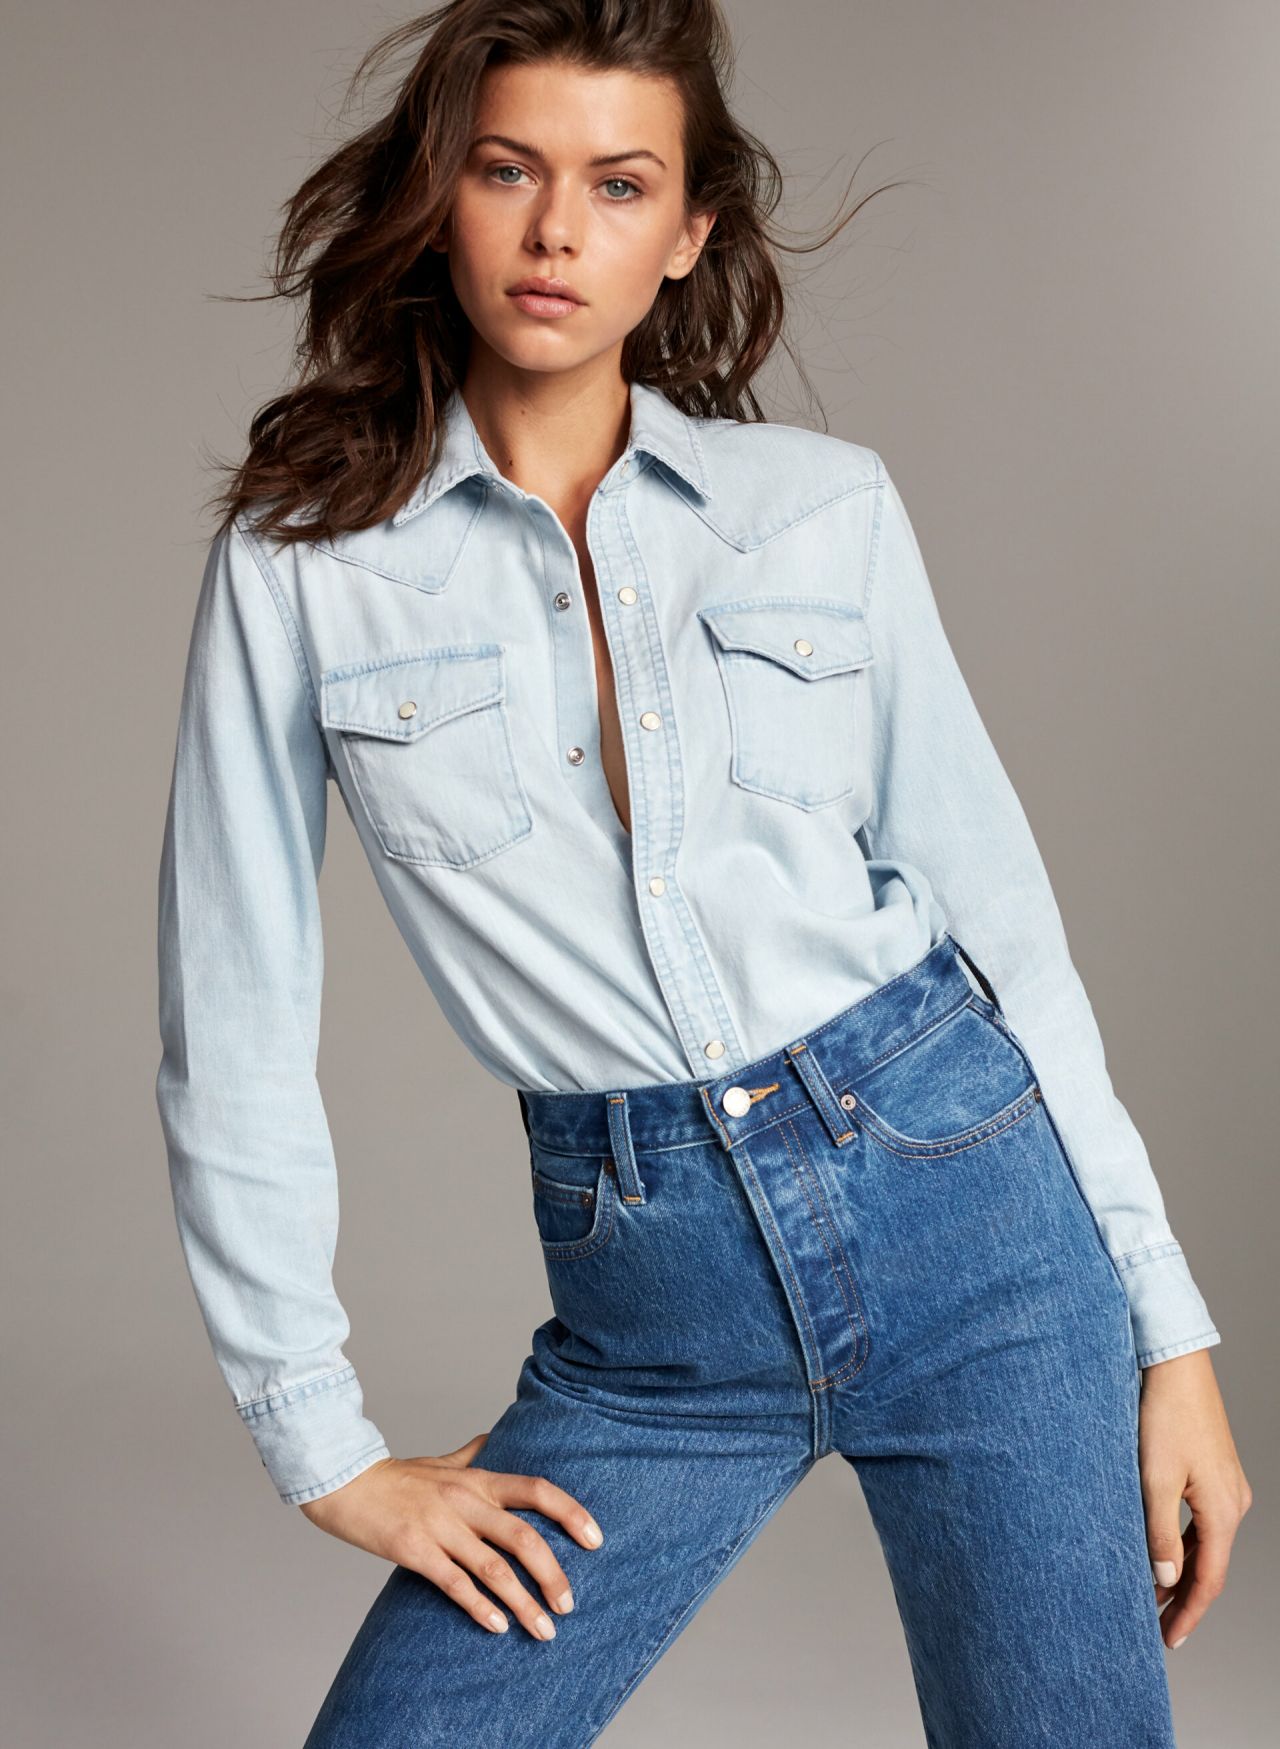 Georgia Fowler - Modeling for Aritzia Jeans March 2019 • CelebMafia